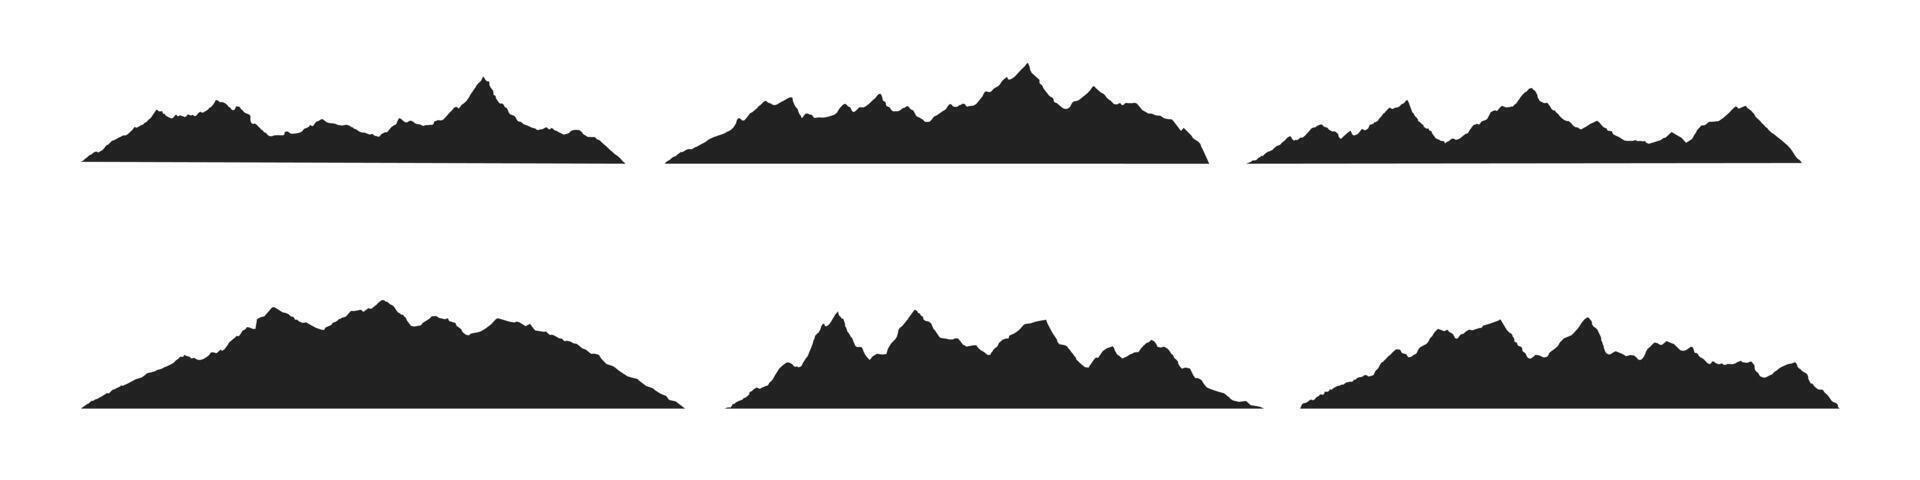 montaña crestas pico siluetas plano estilo diseño vector ilustración conjunto aislado en blanco antecedentes. rocoso montañas picos con varios rangos al aire libre naturaleza paisaje antecedentes diseño elementos.